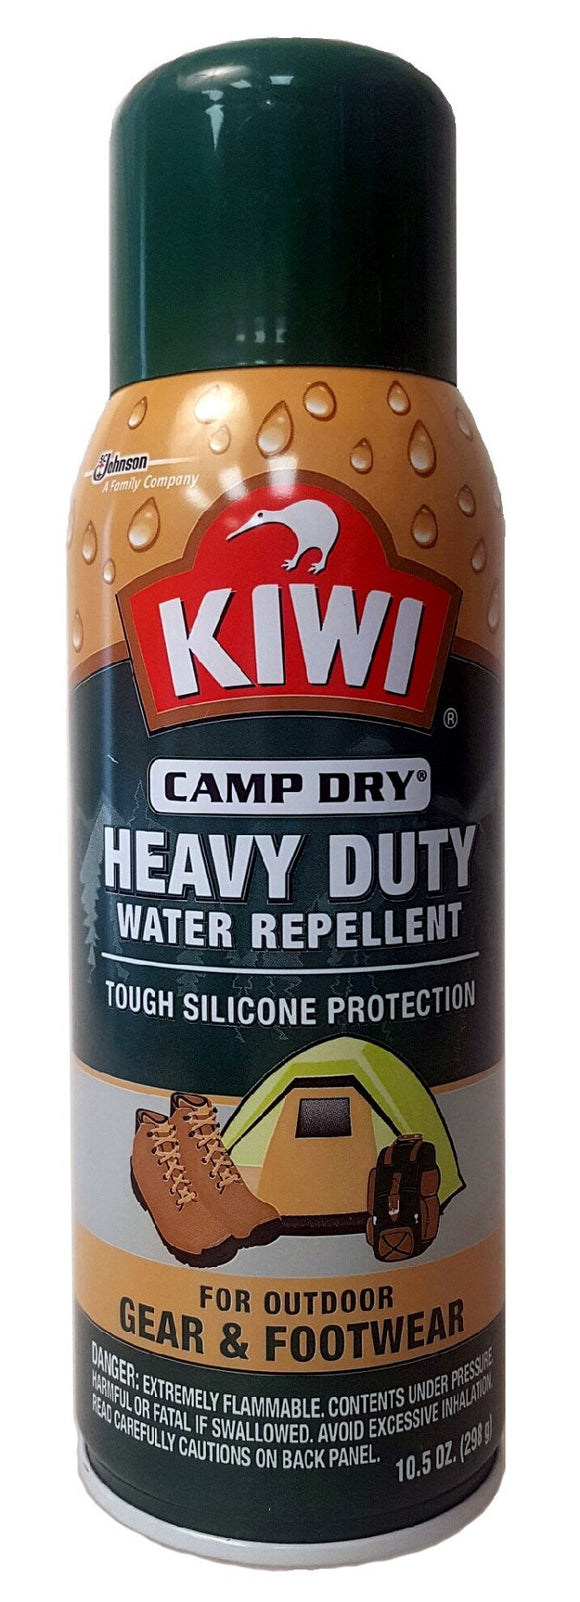 Kiwi Camp Dry Heavy Duty Water Repellent Spray 10.5oz - Premium Waterproof from Herdzco Supplies - Just $16.99! Shop now at Herdzco Supplies